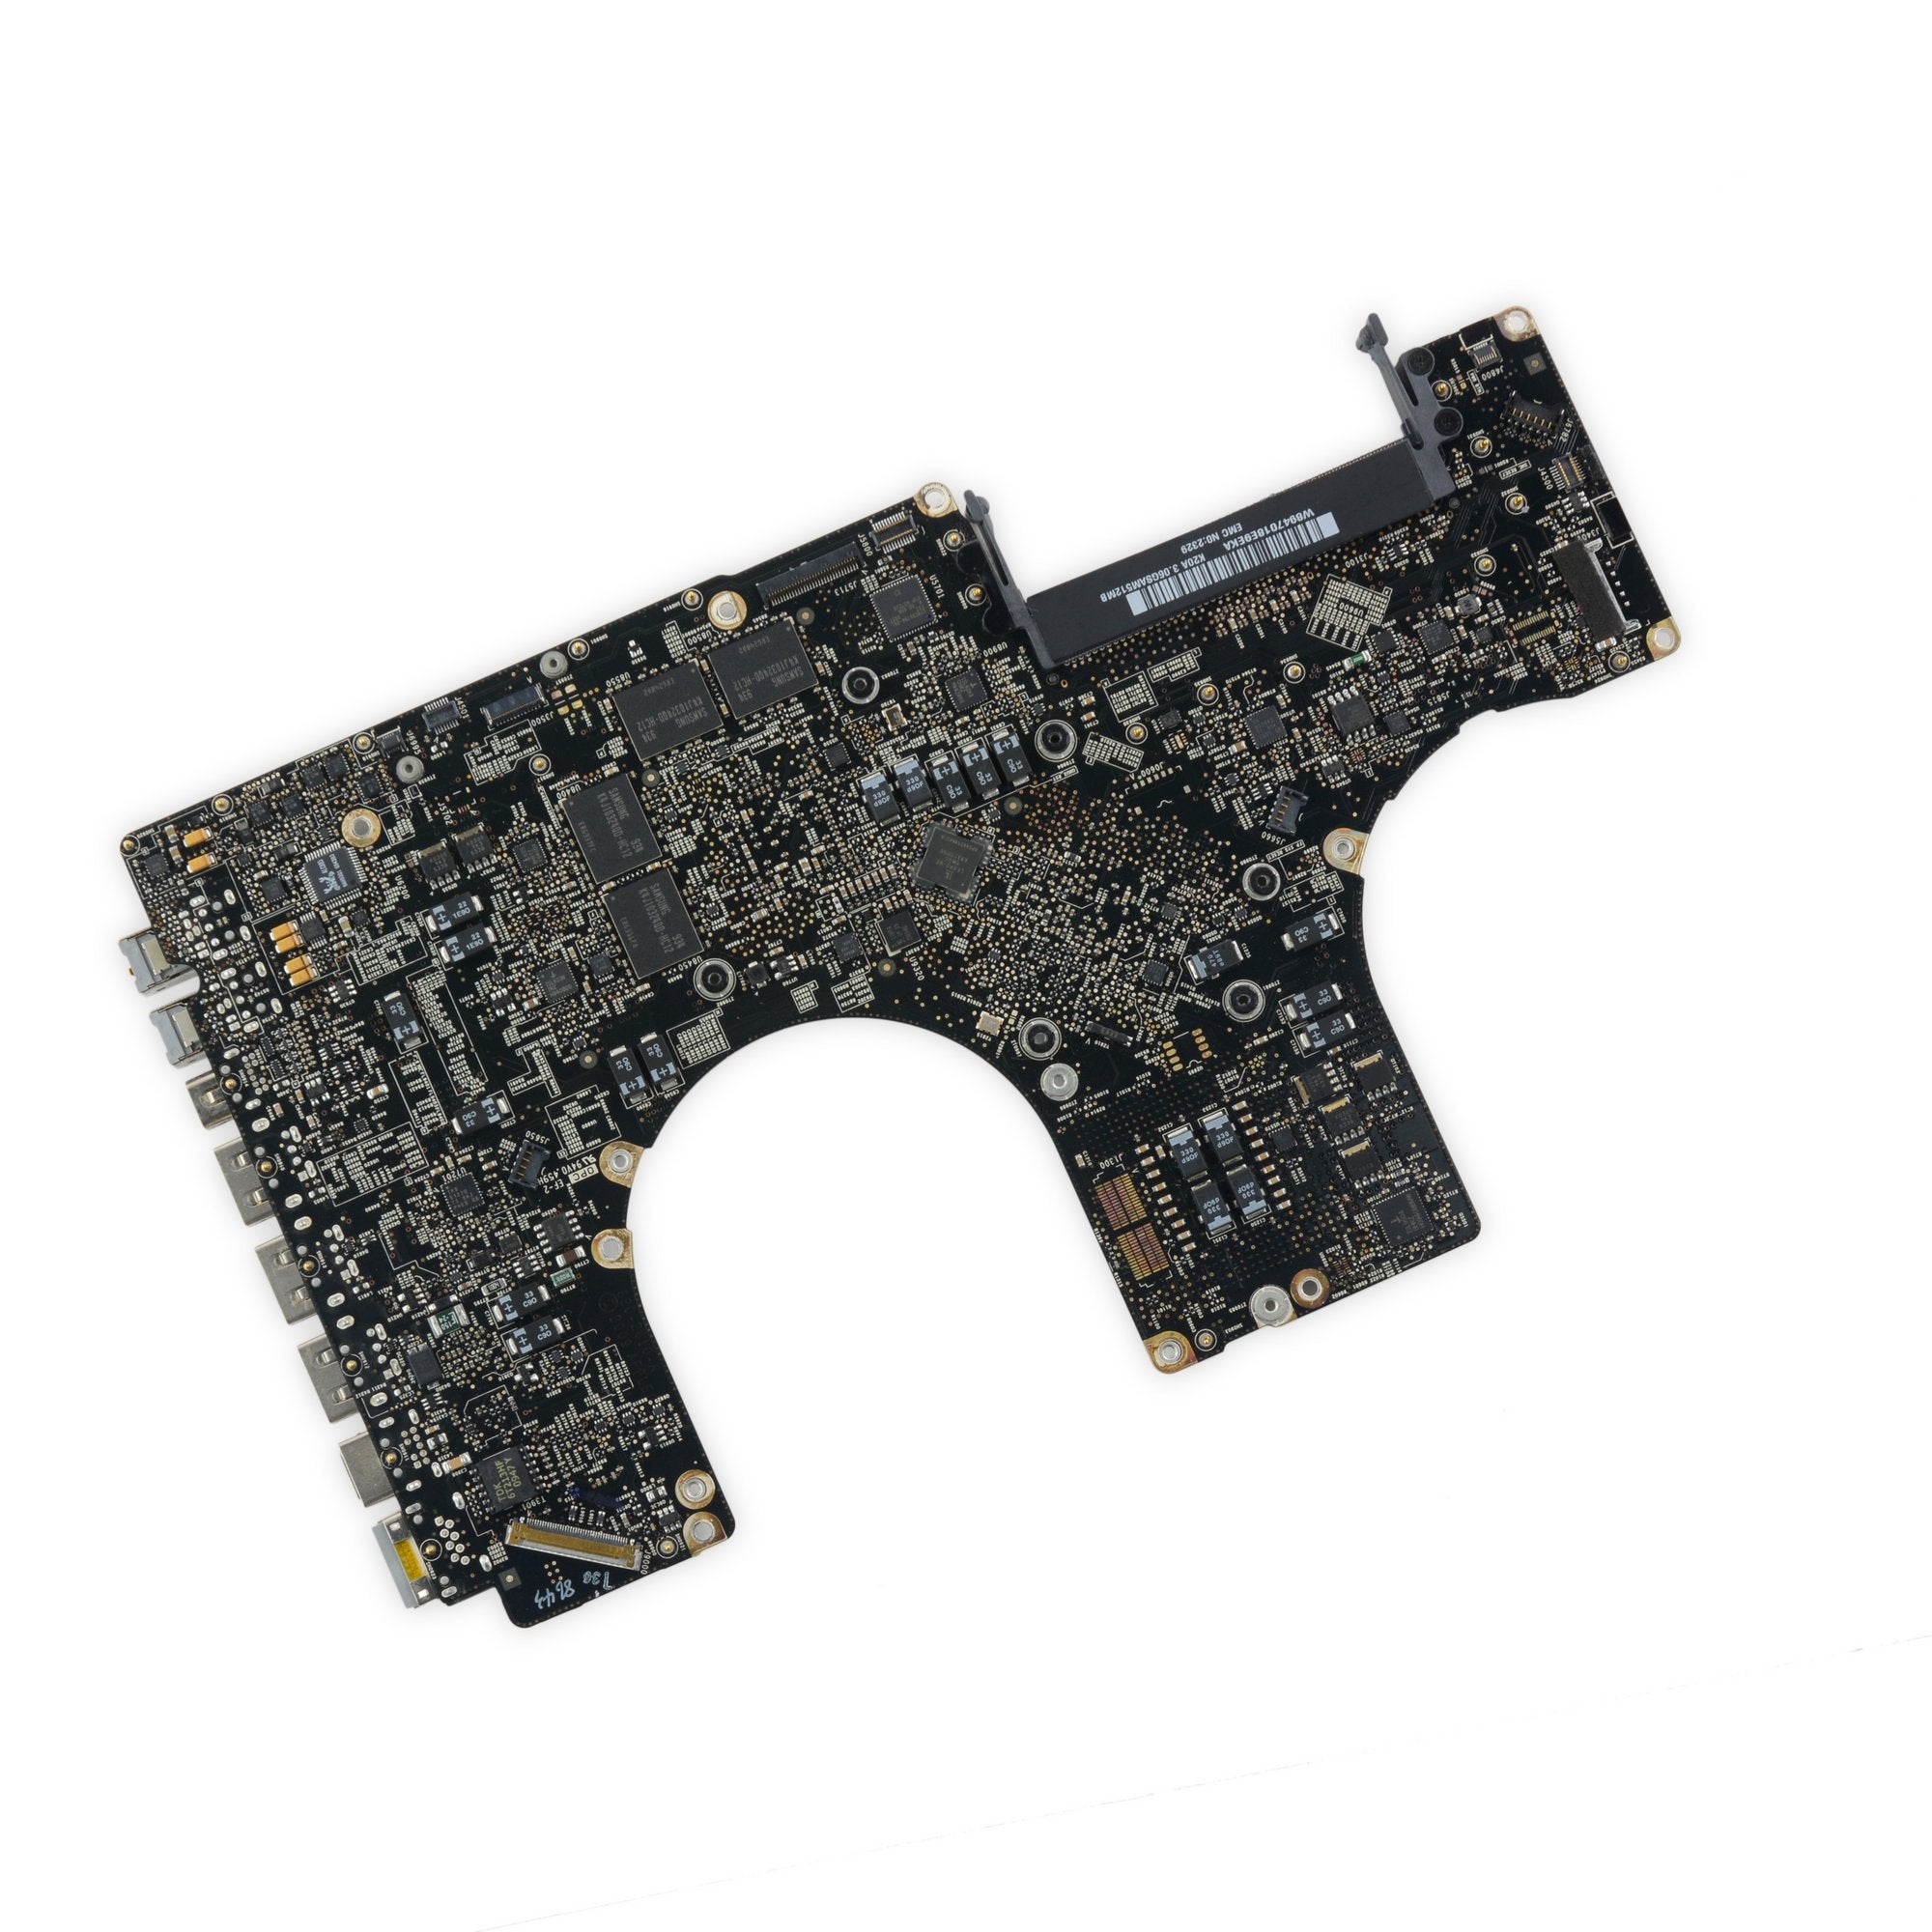 MacBook Pro 17" Unibody (Mid 2009) 3.06 GHz Logic Board